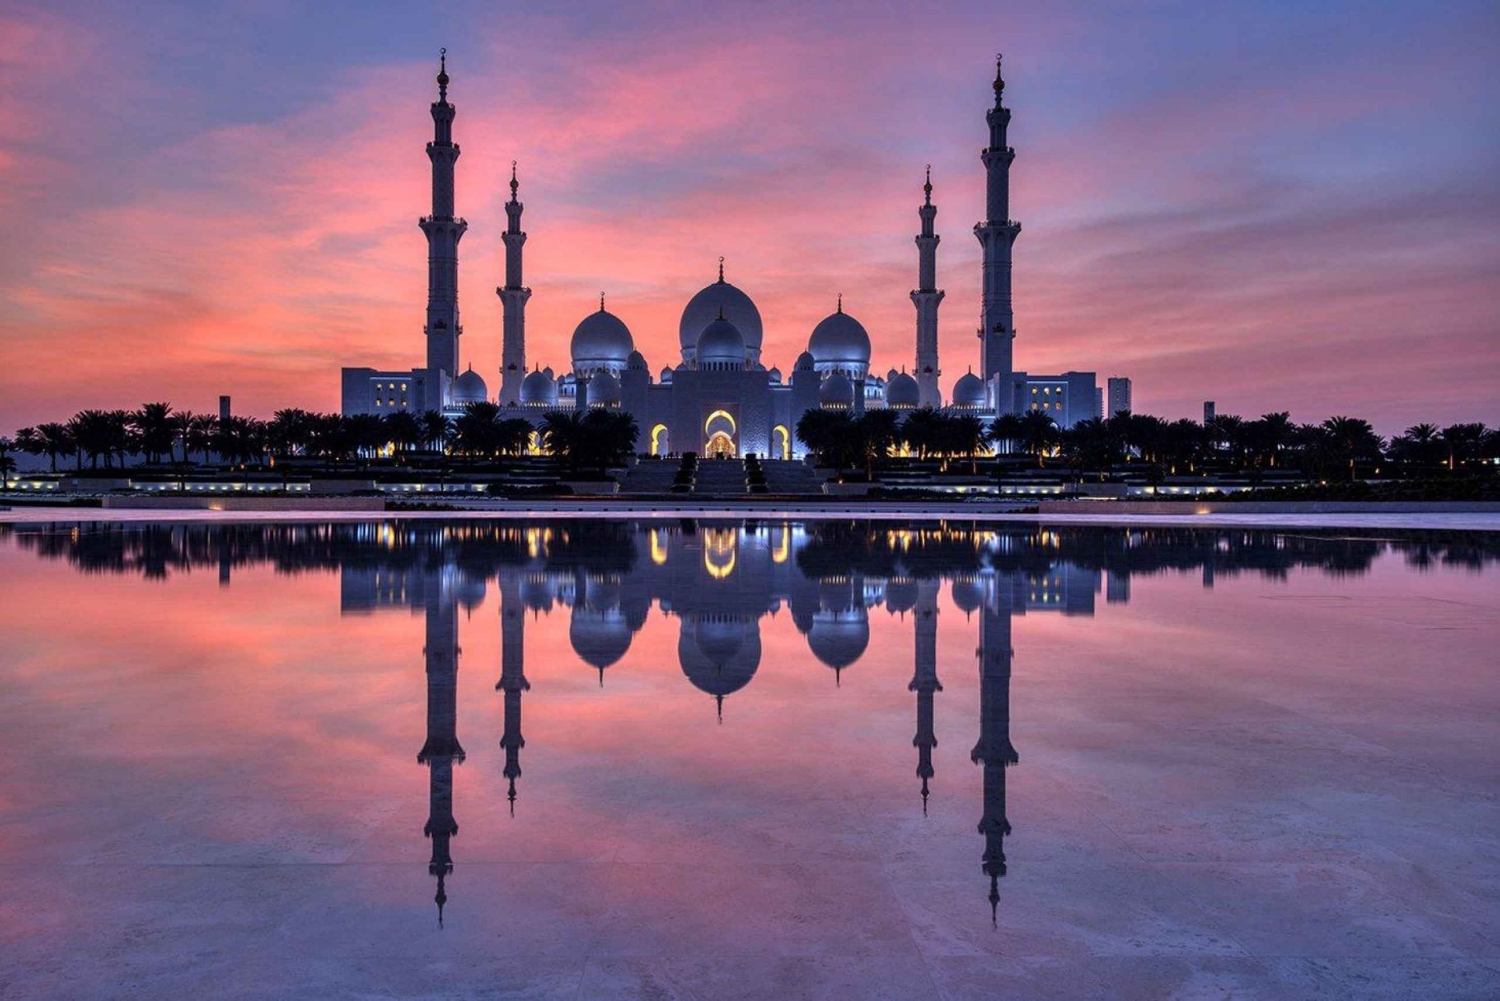 Z Dubaju: Abu Dhabi Mosque and City Highlights Tour